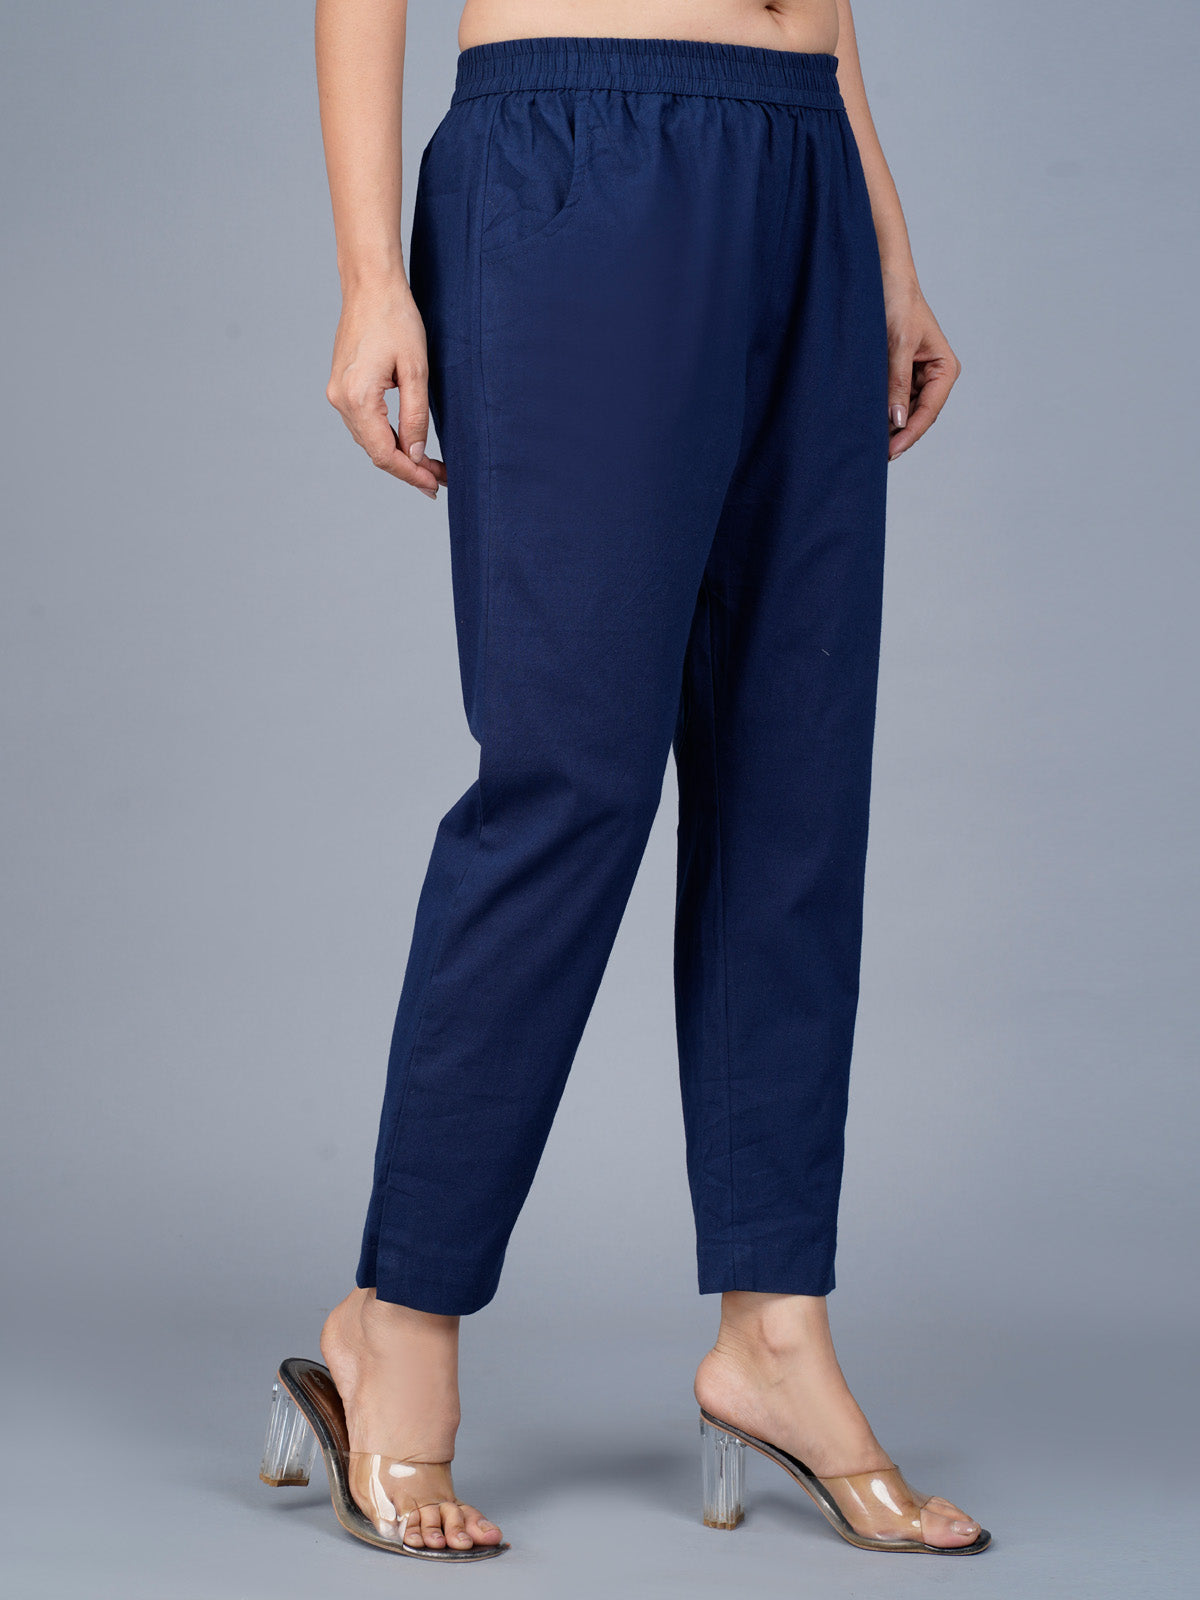 Women's Navy Blue Regular Fit Elastic Cotton Trouser